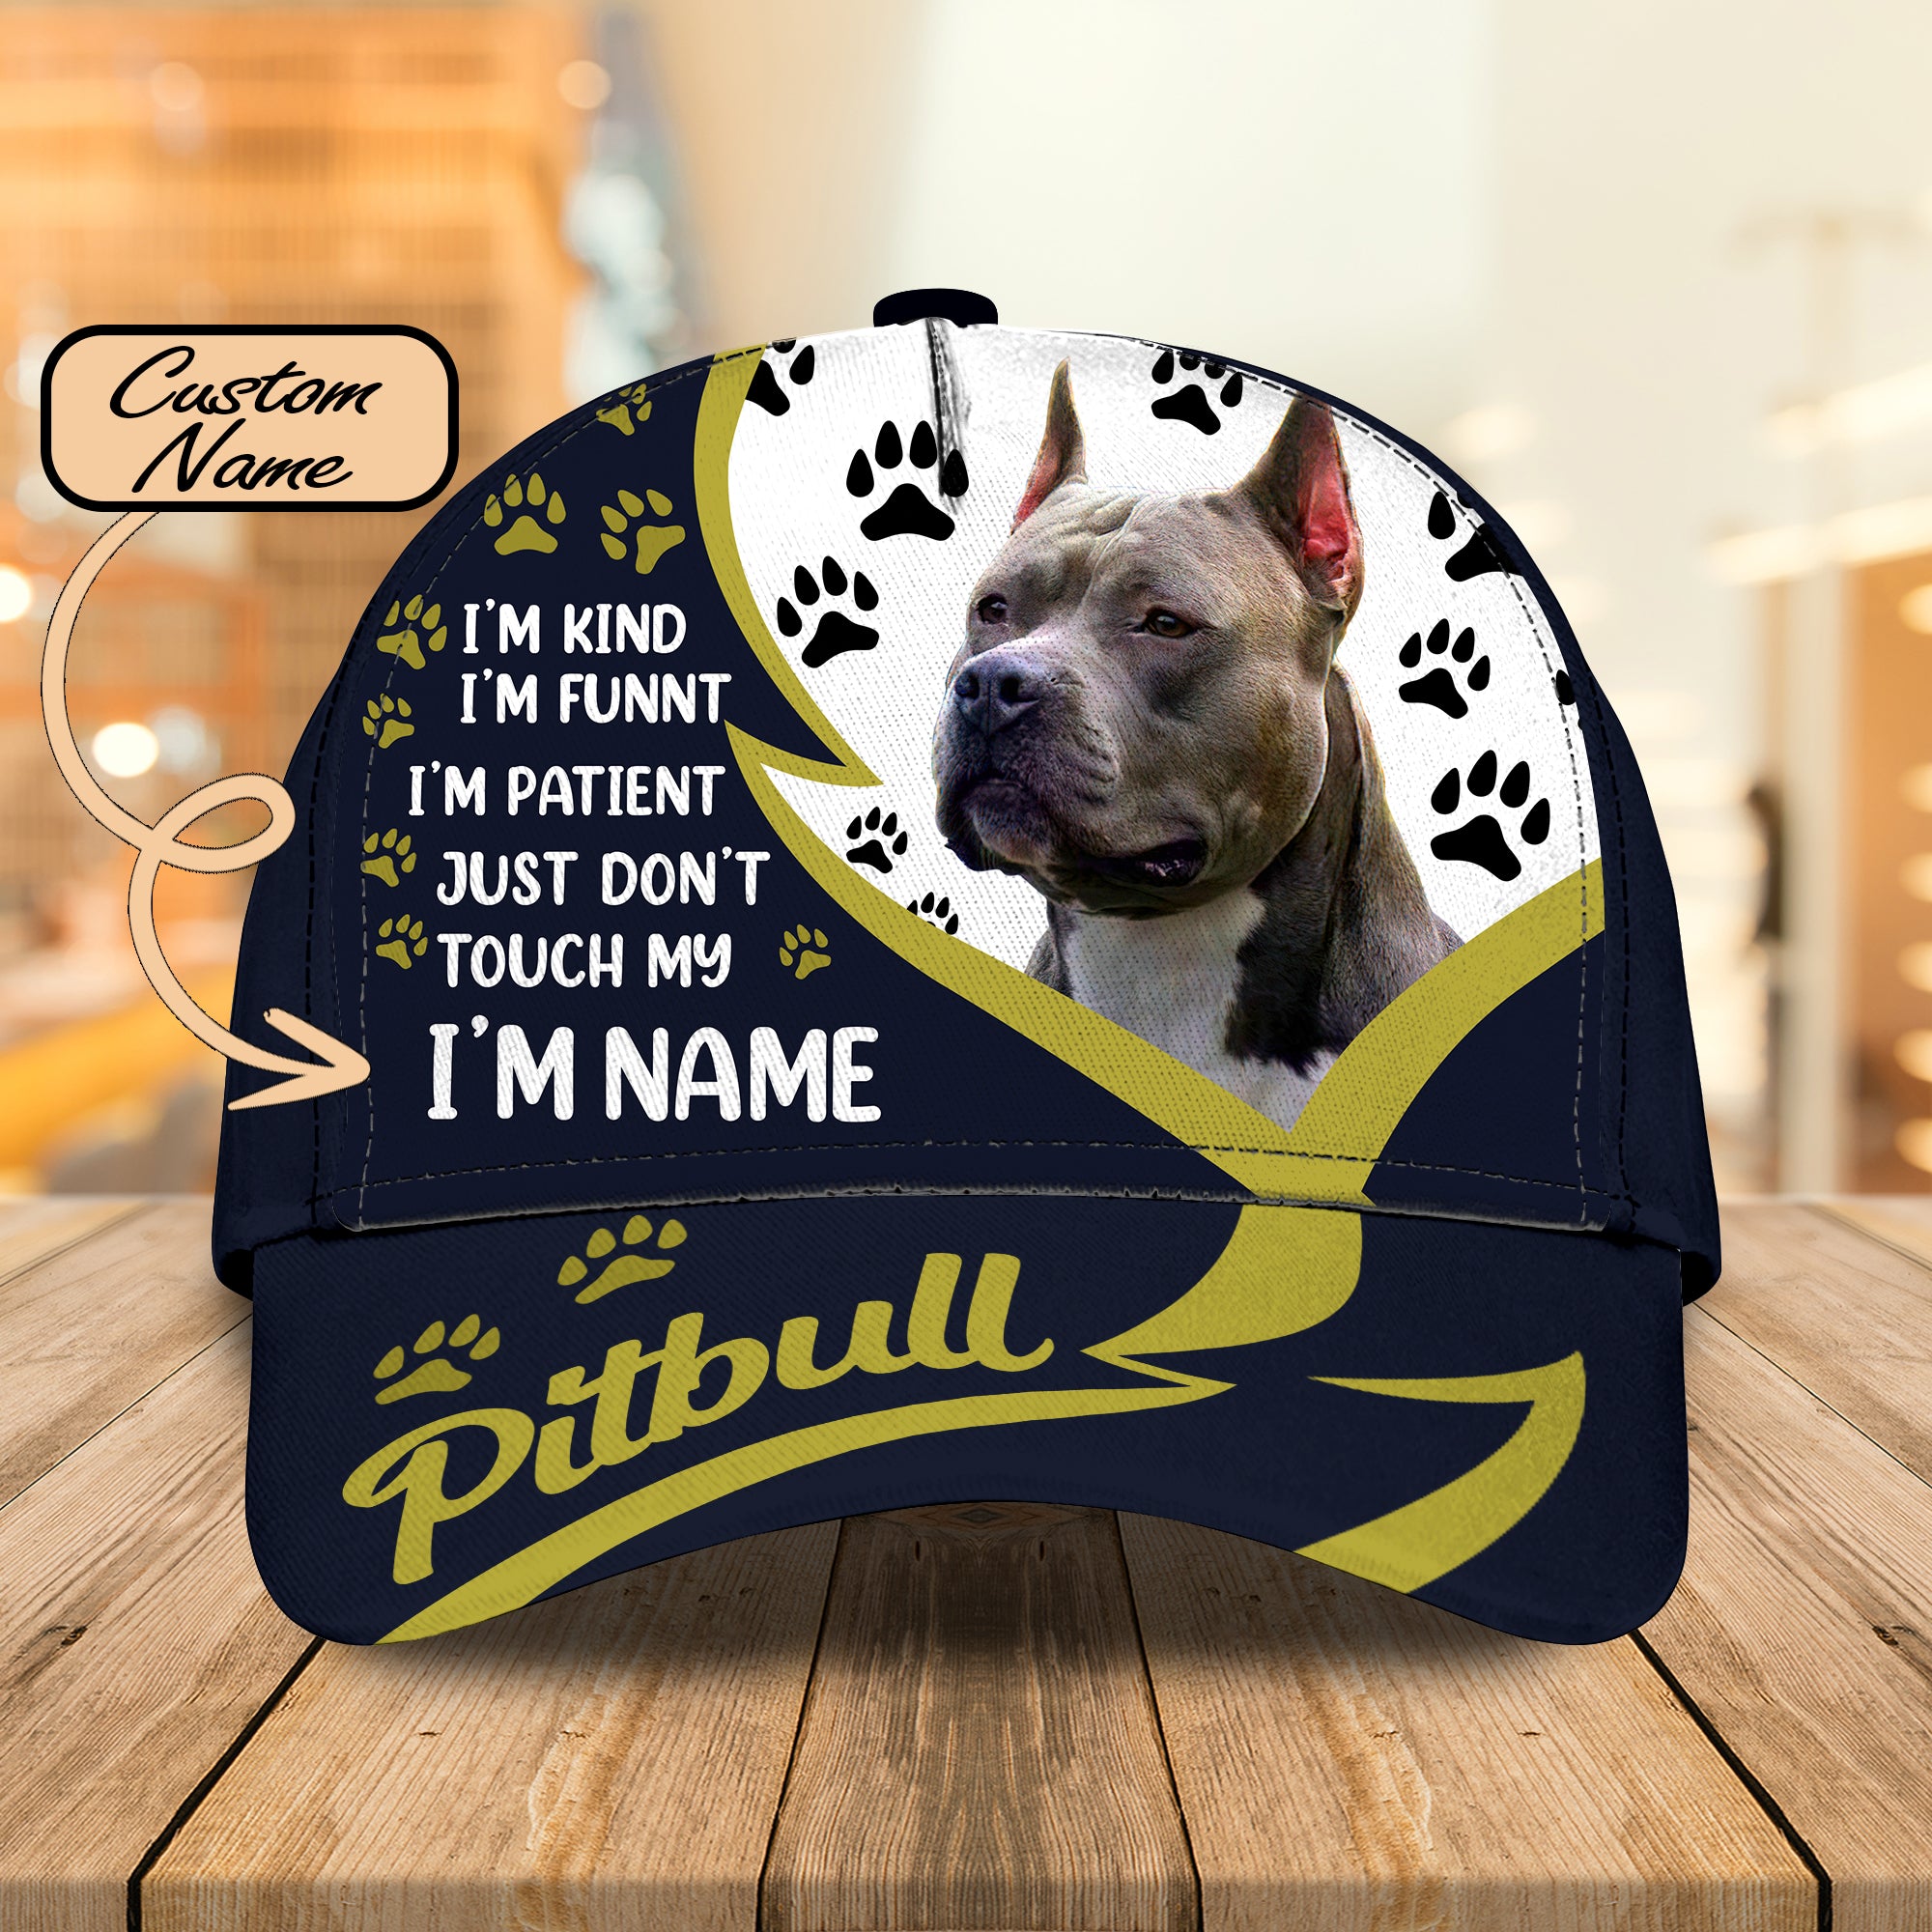 Pitbull - Personalized Name Cap - DAT93